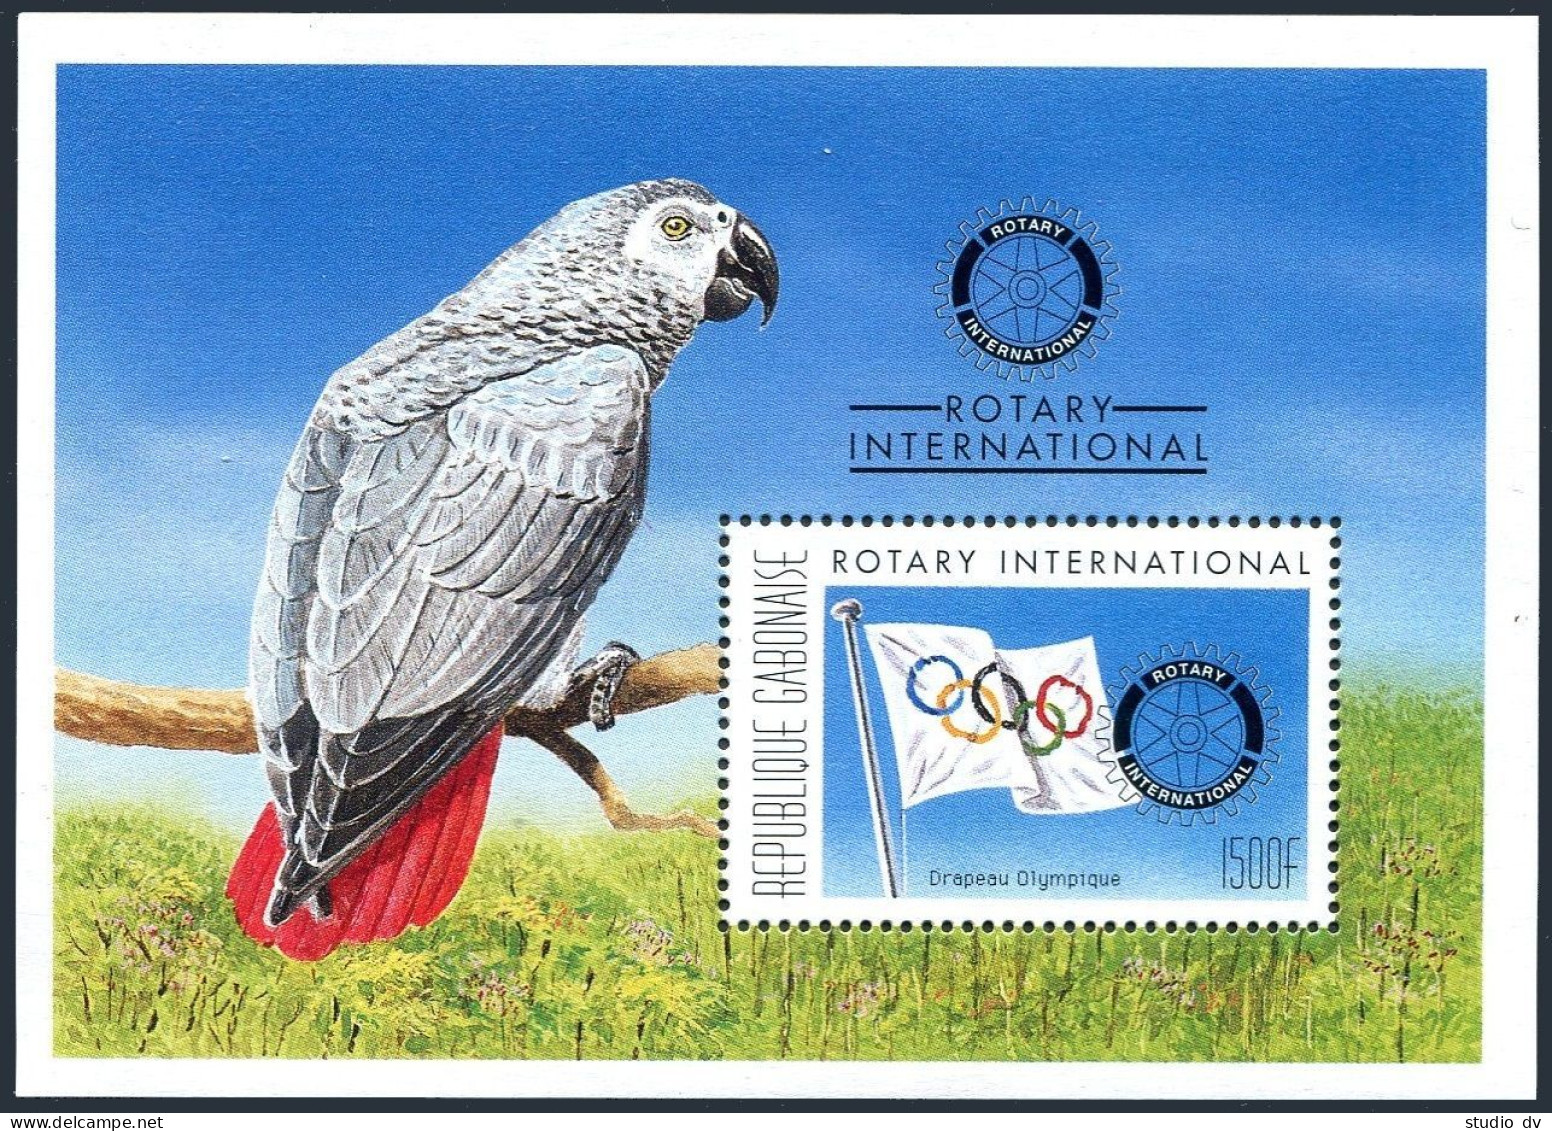 Gabon 821, MNH. Rotary International 1996. Emblem. Olympic Flag, Parrot. - Gabon (1960-...)